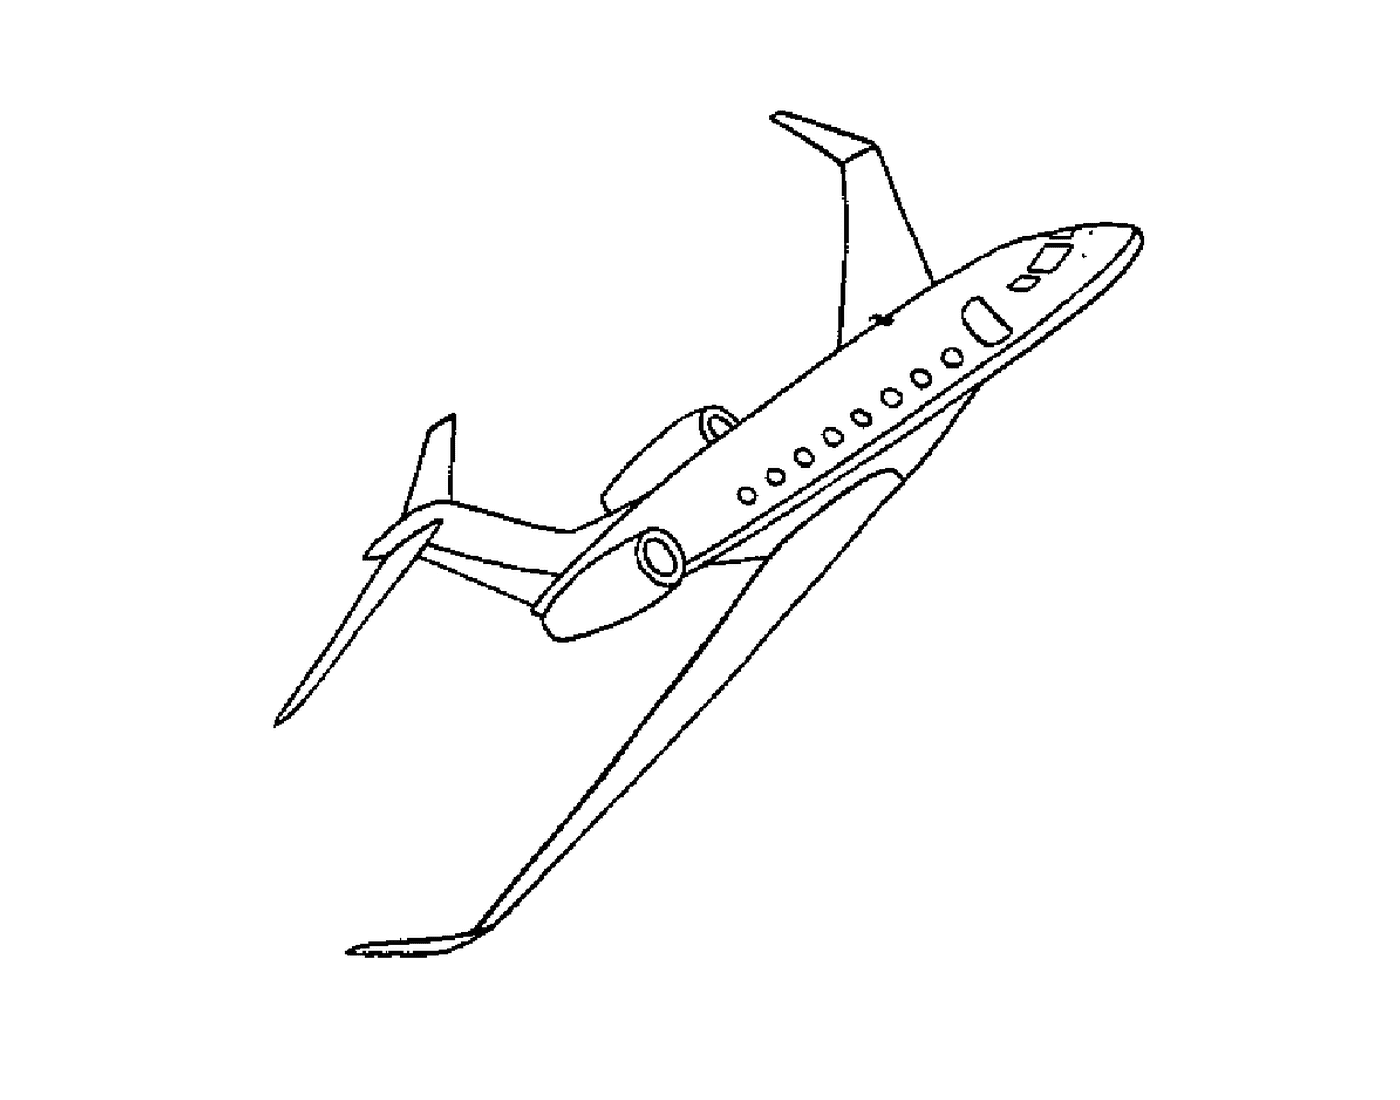   Un avion qui vole 